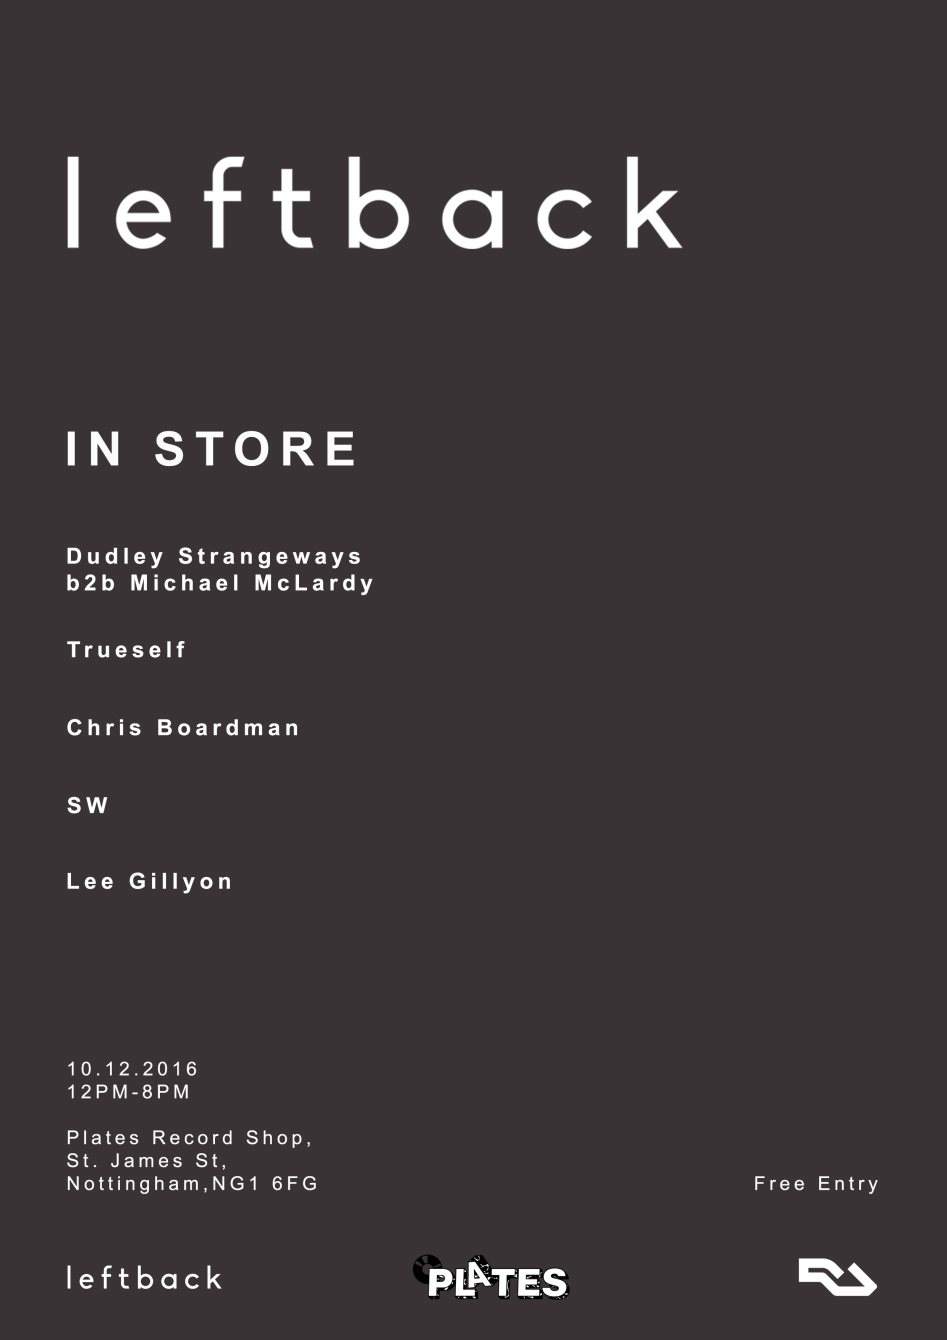 Leftback Instore - フライヤー表